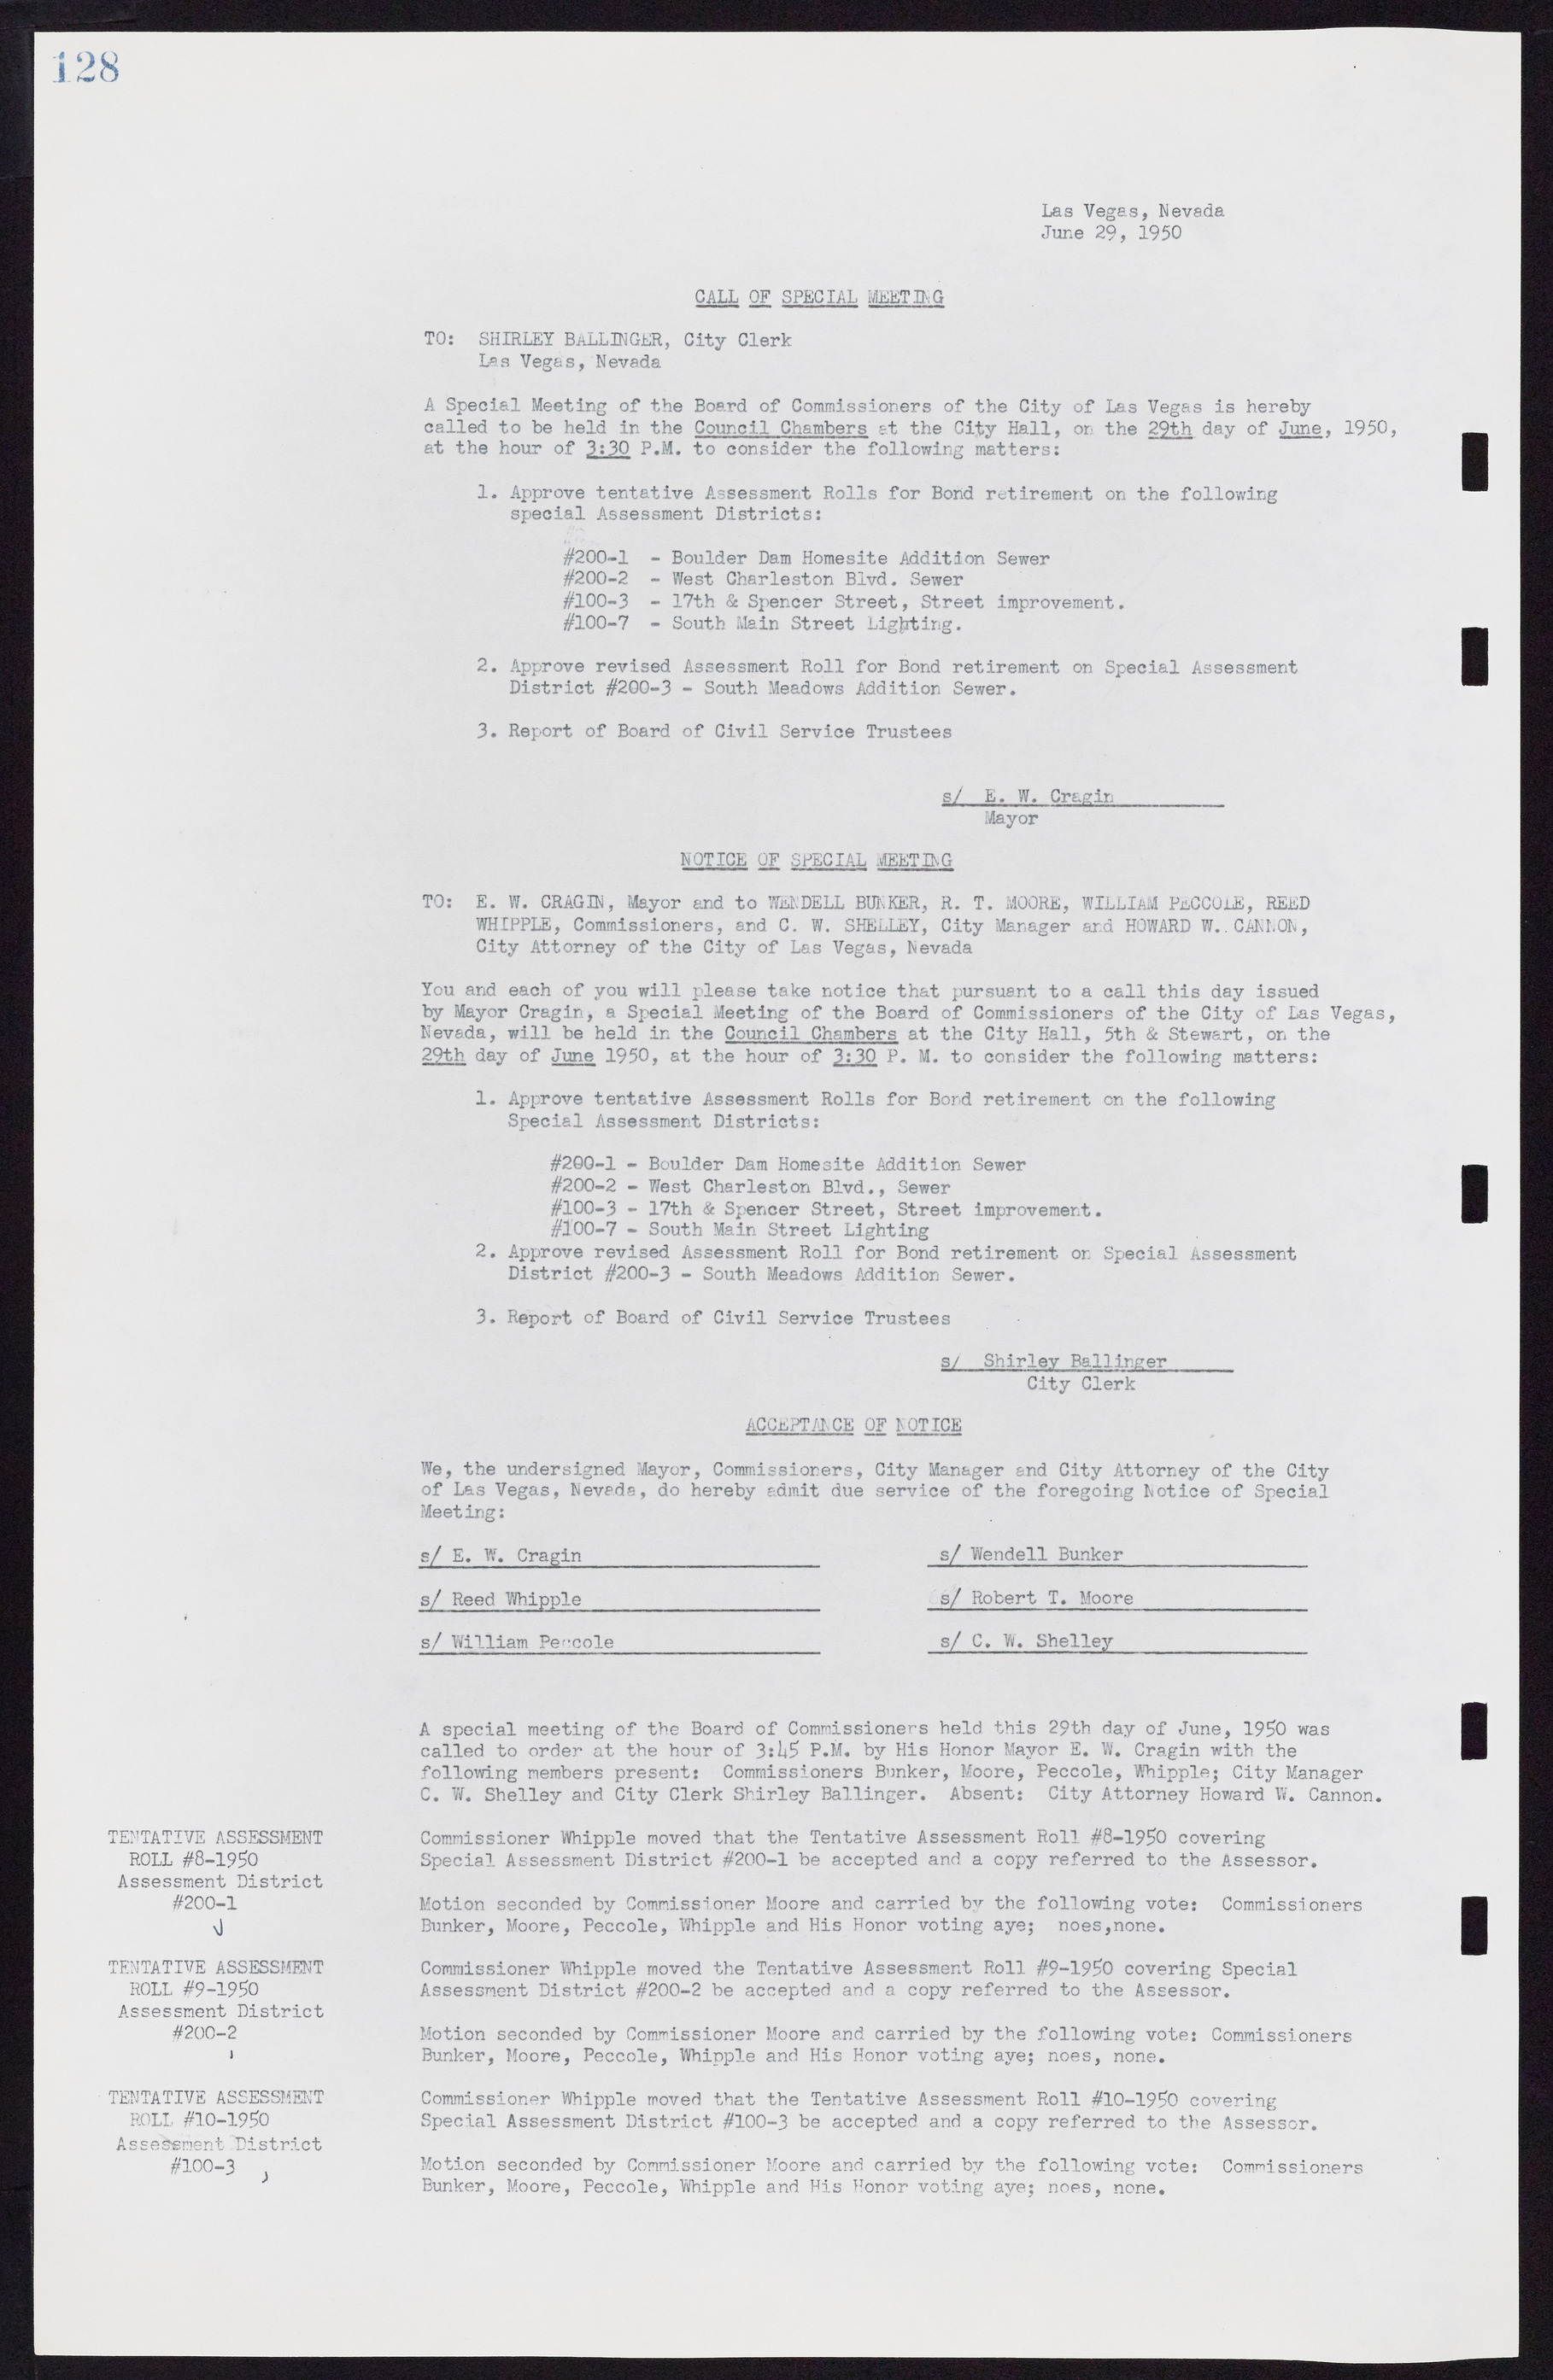 Las Vegas City Commission Minutes, November 7, 1949 to May 21, 1952, lvc000007-136